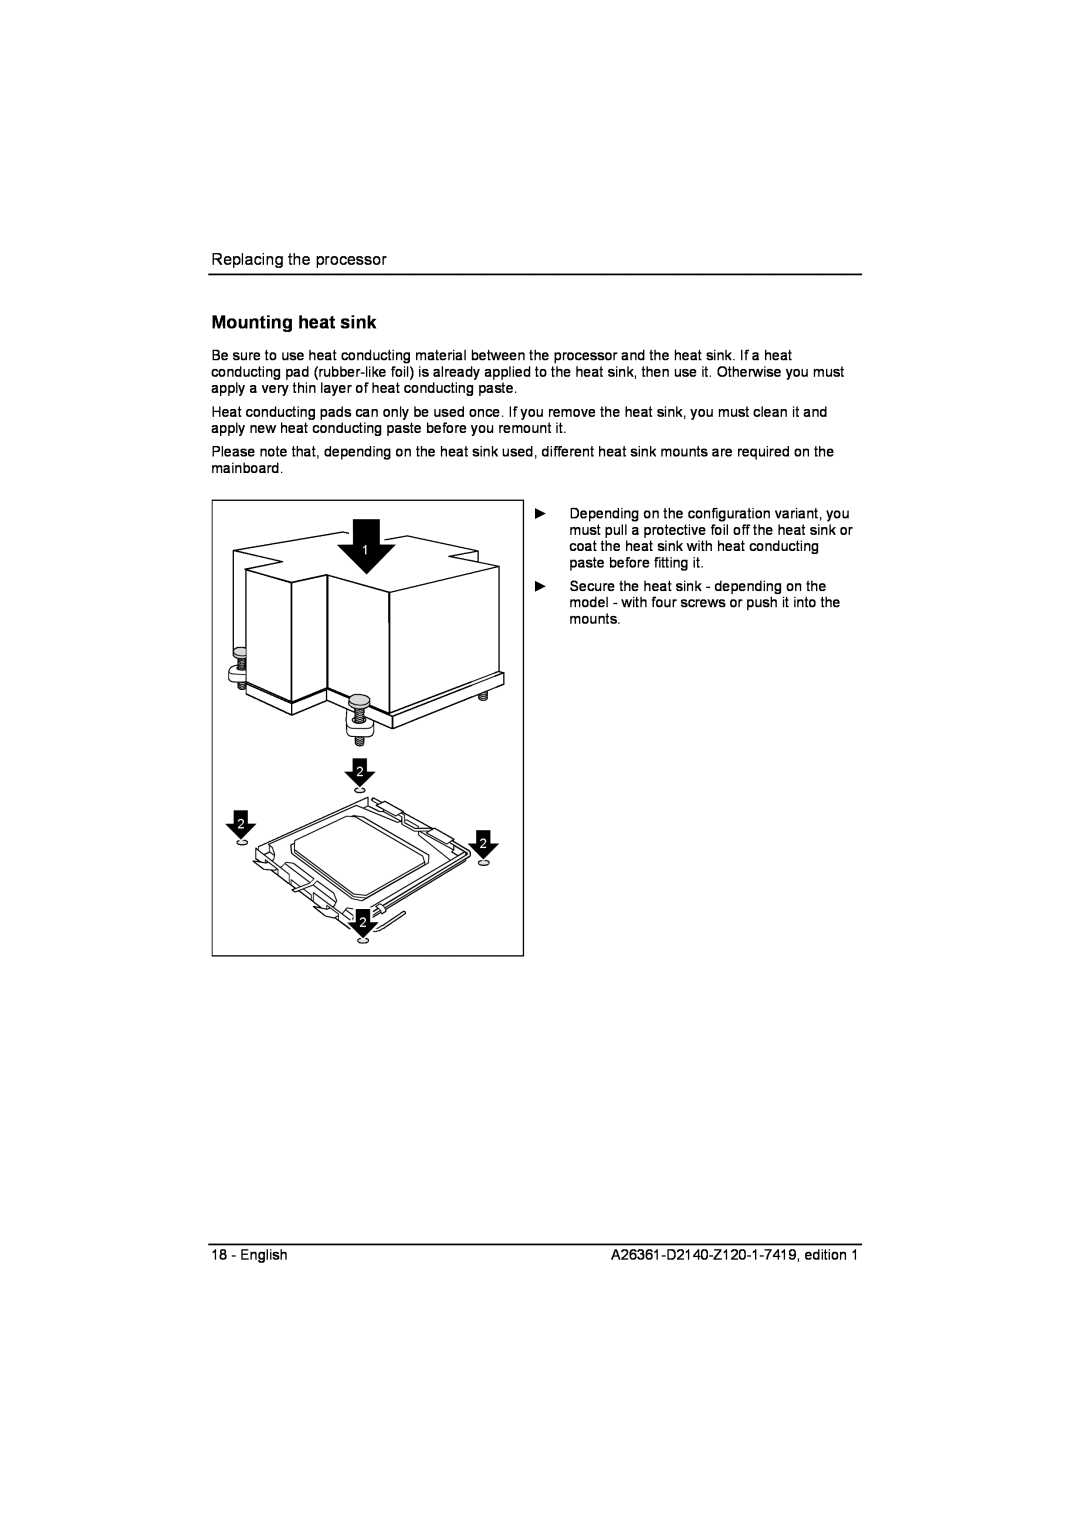 Eclipse - Fujitsu Ten D2140 technical manual Mounting heat sink, Replacing the processor 